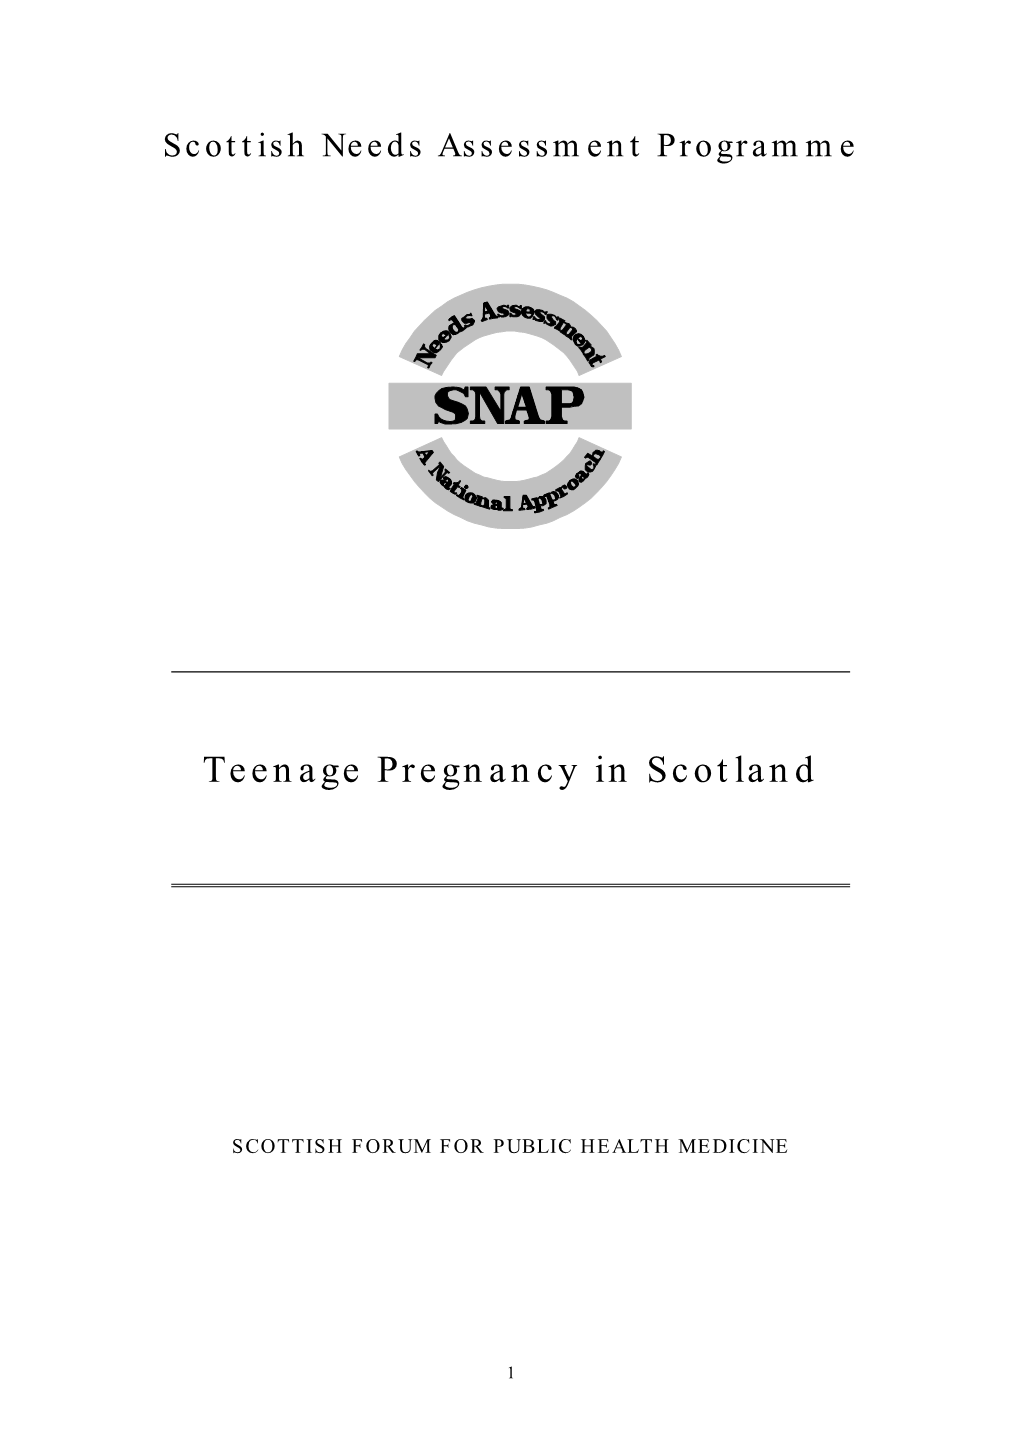 Teenage Pregnancy in Scotland